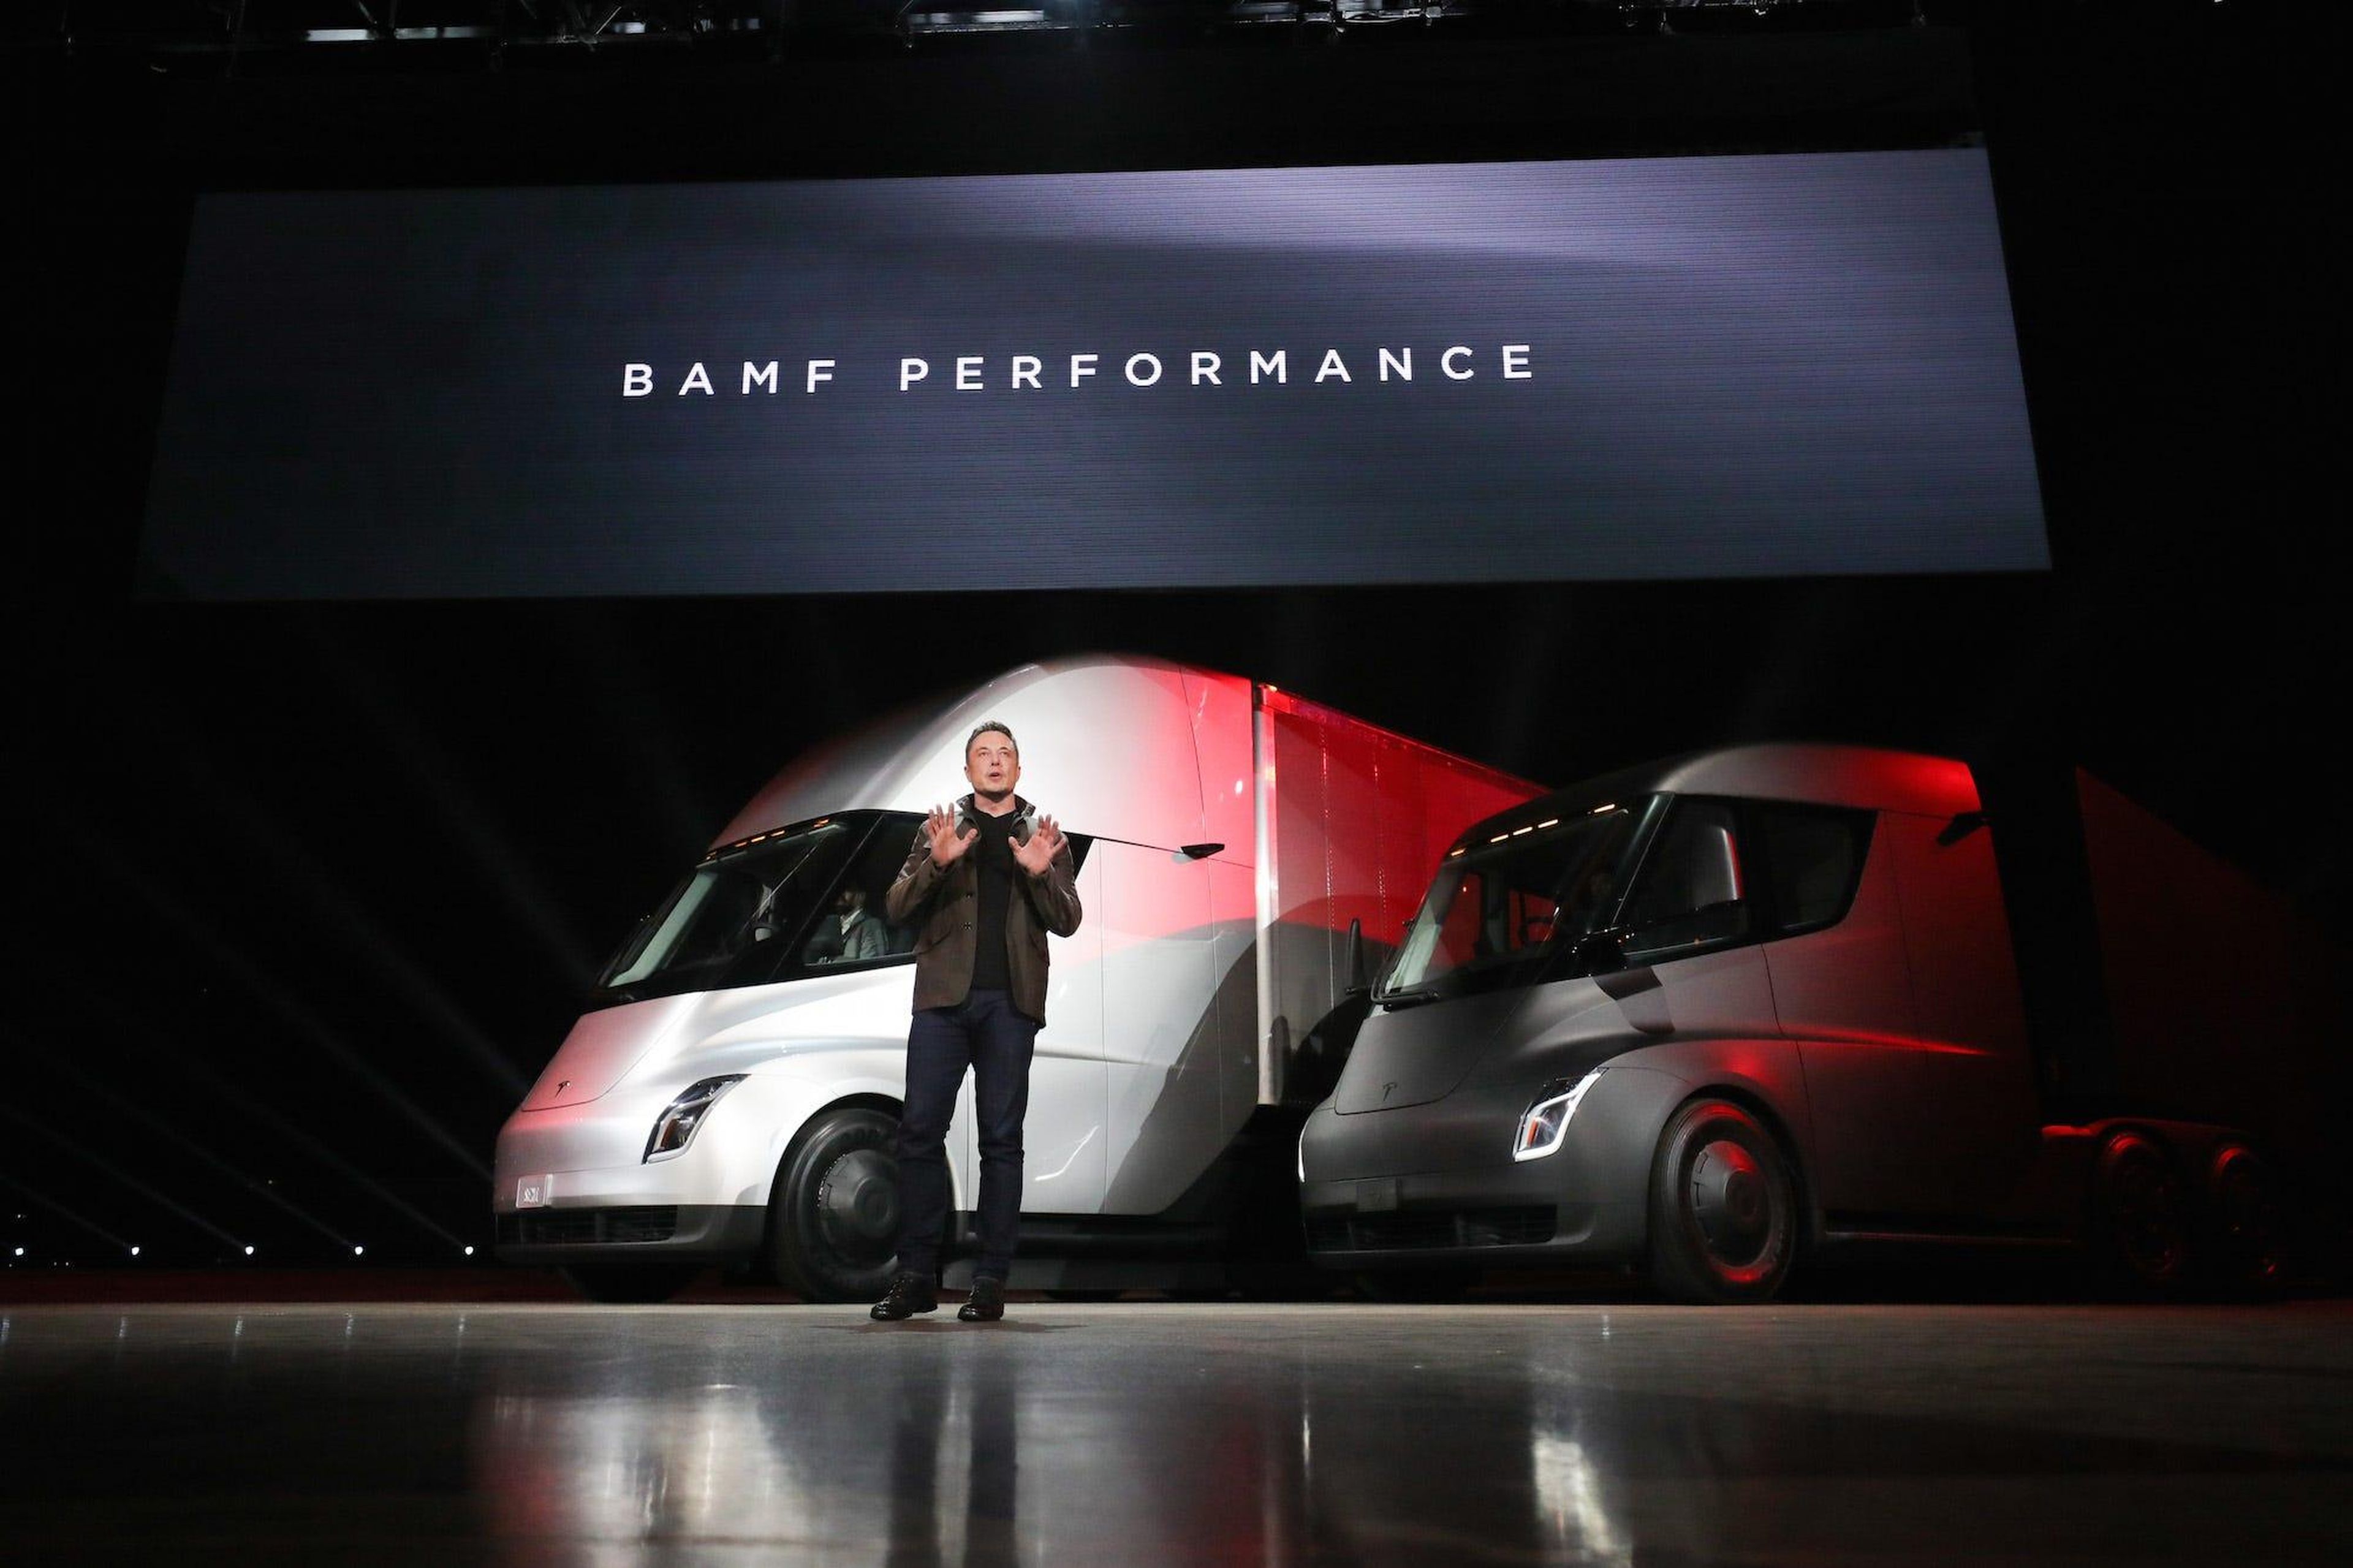 Elon Musk presenta el Tesla Semi.